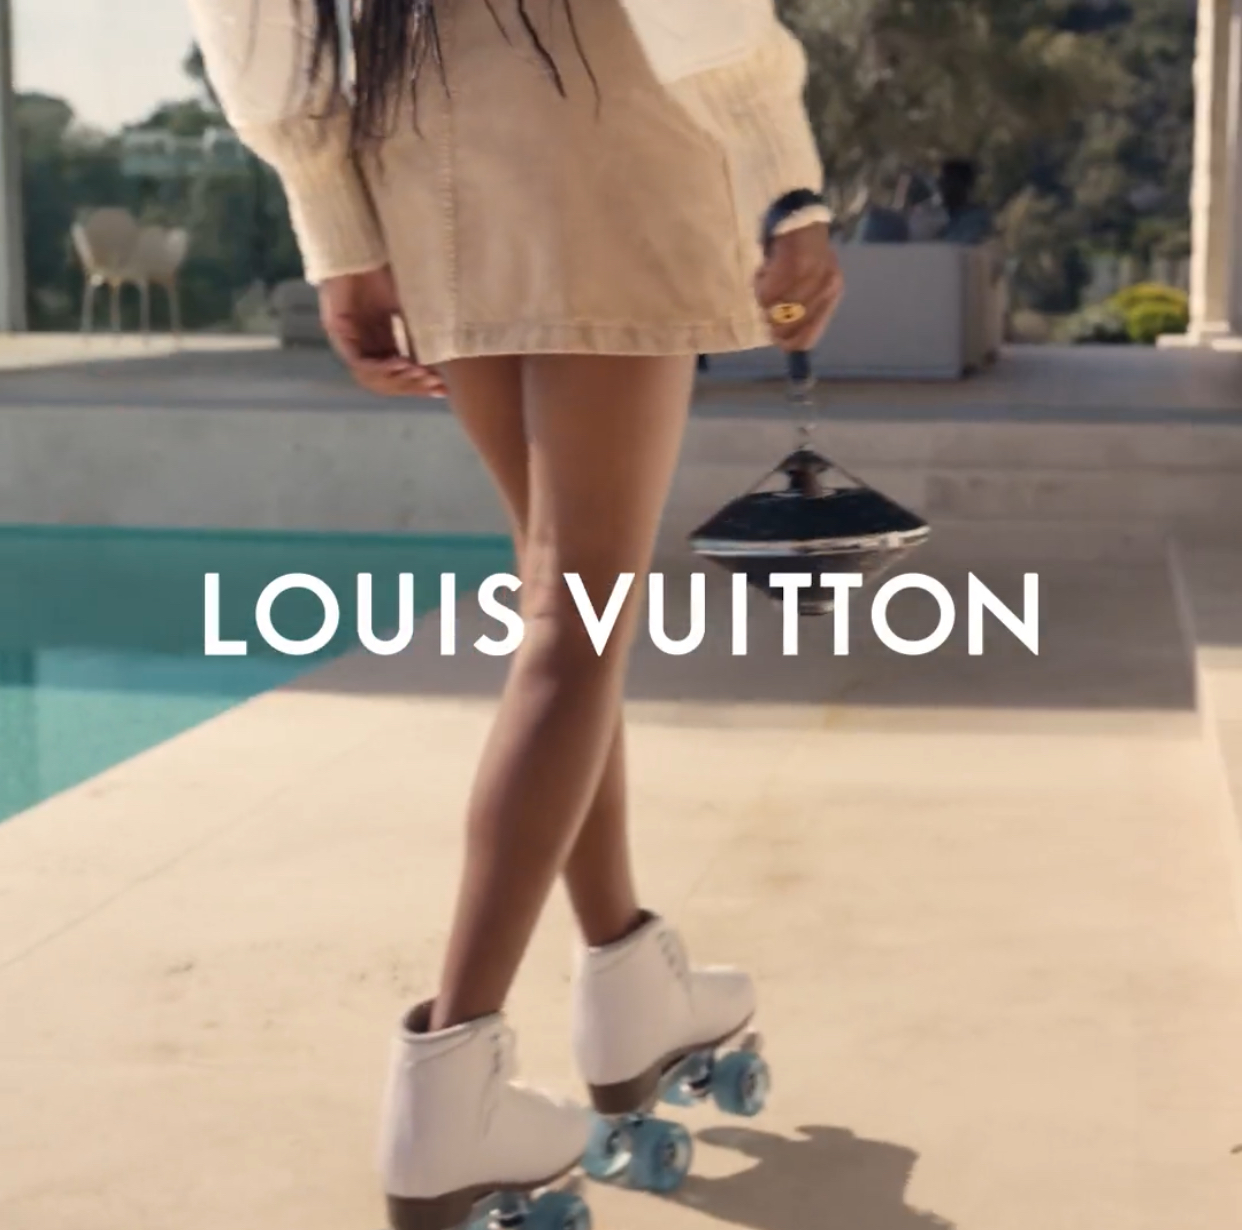 Louis Vuitton Horizon Light Up Speaker Gets New Silver Hue, Costs